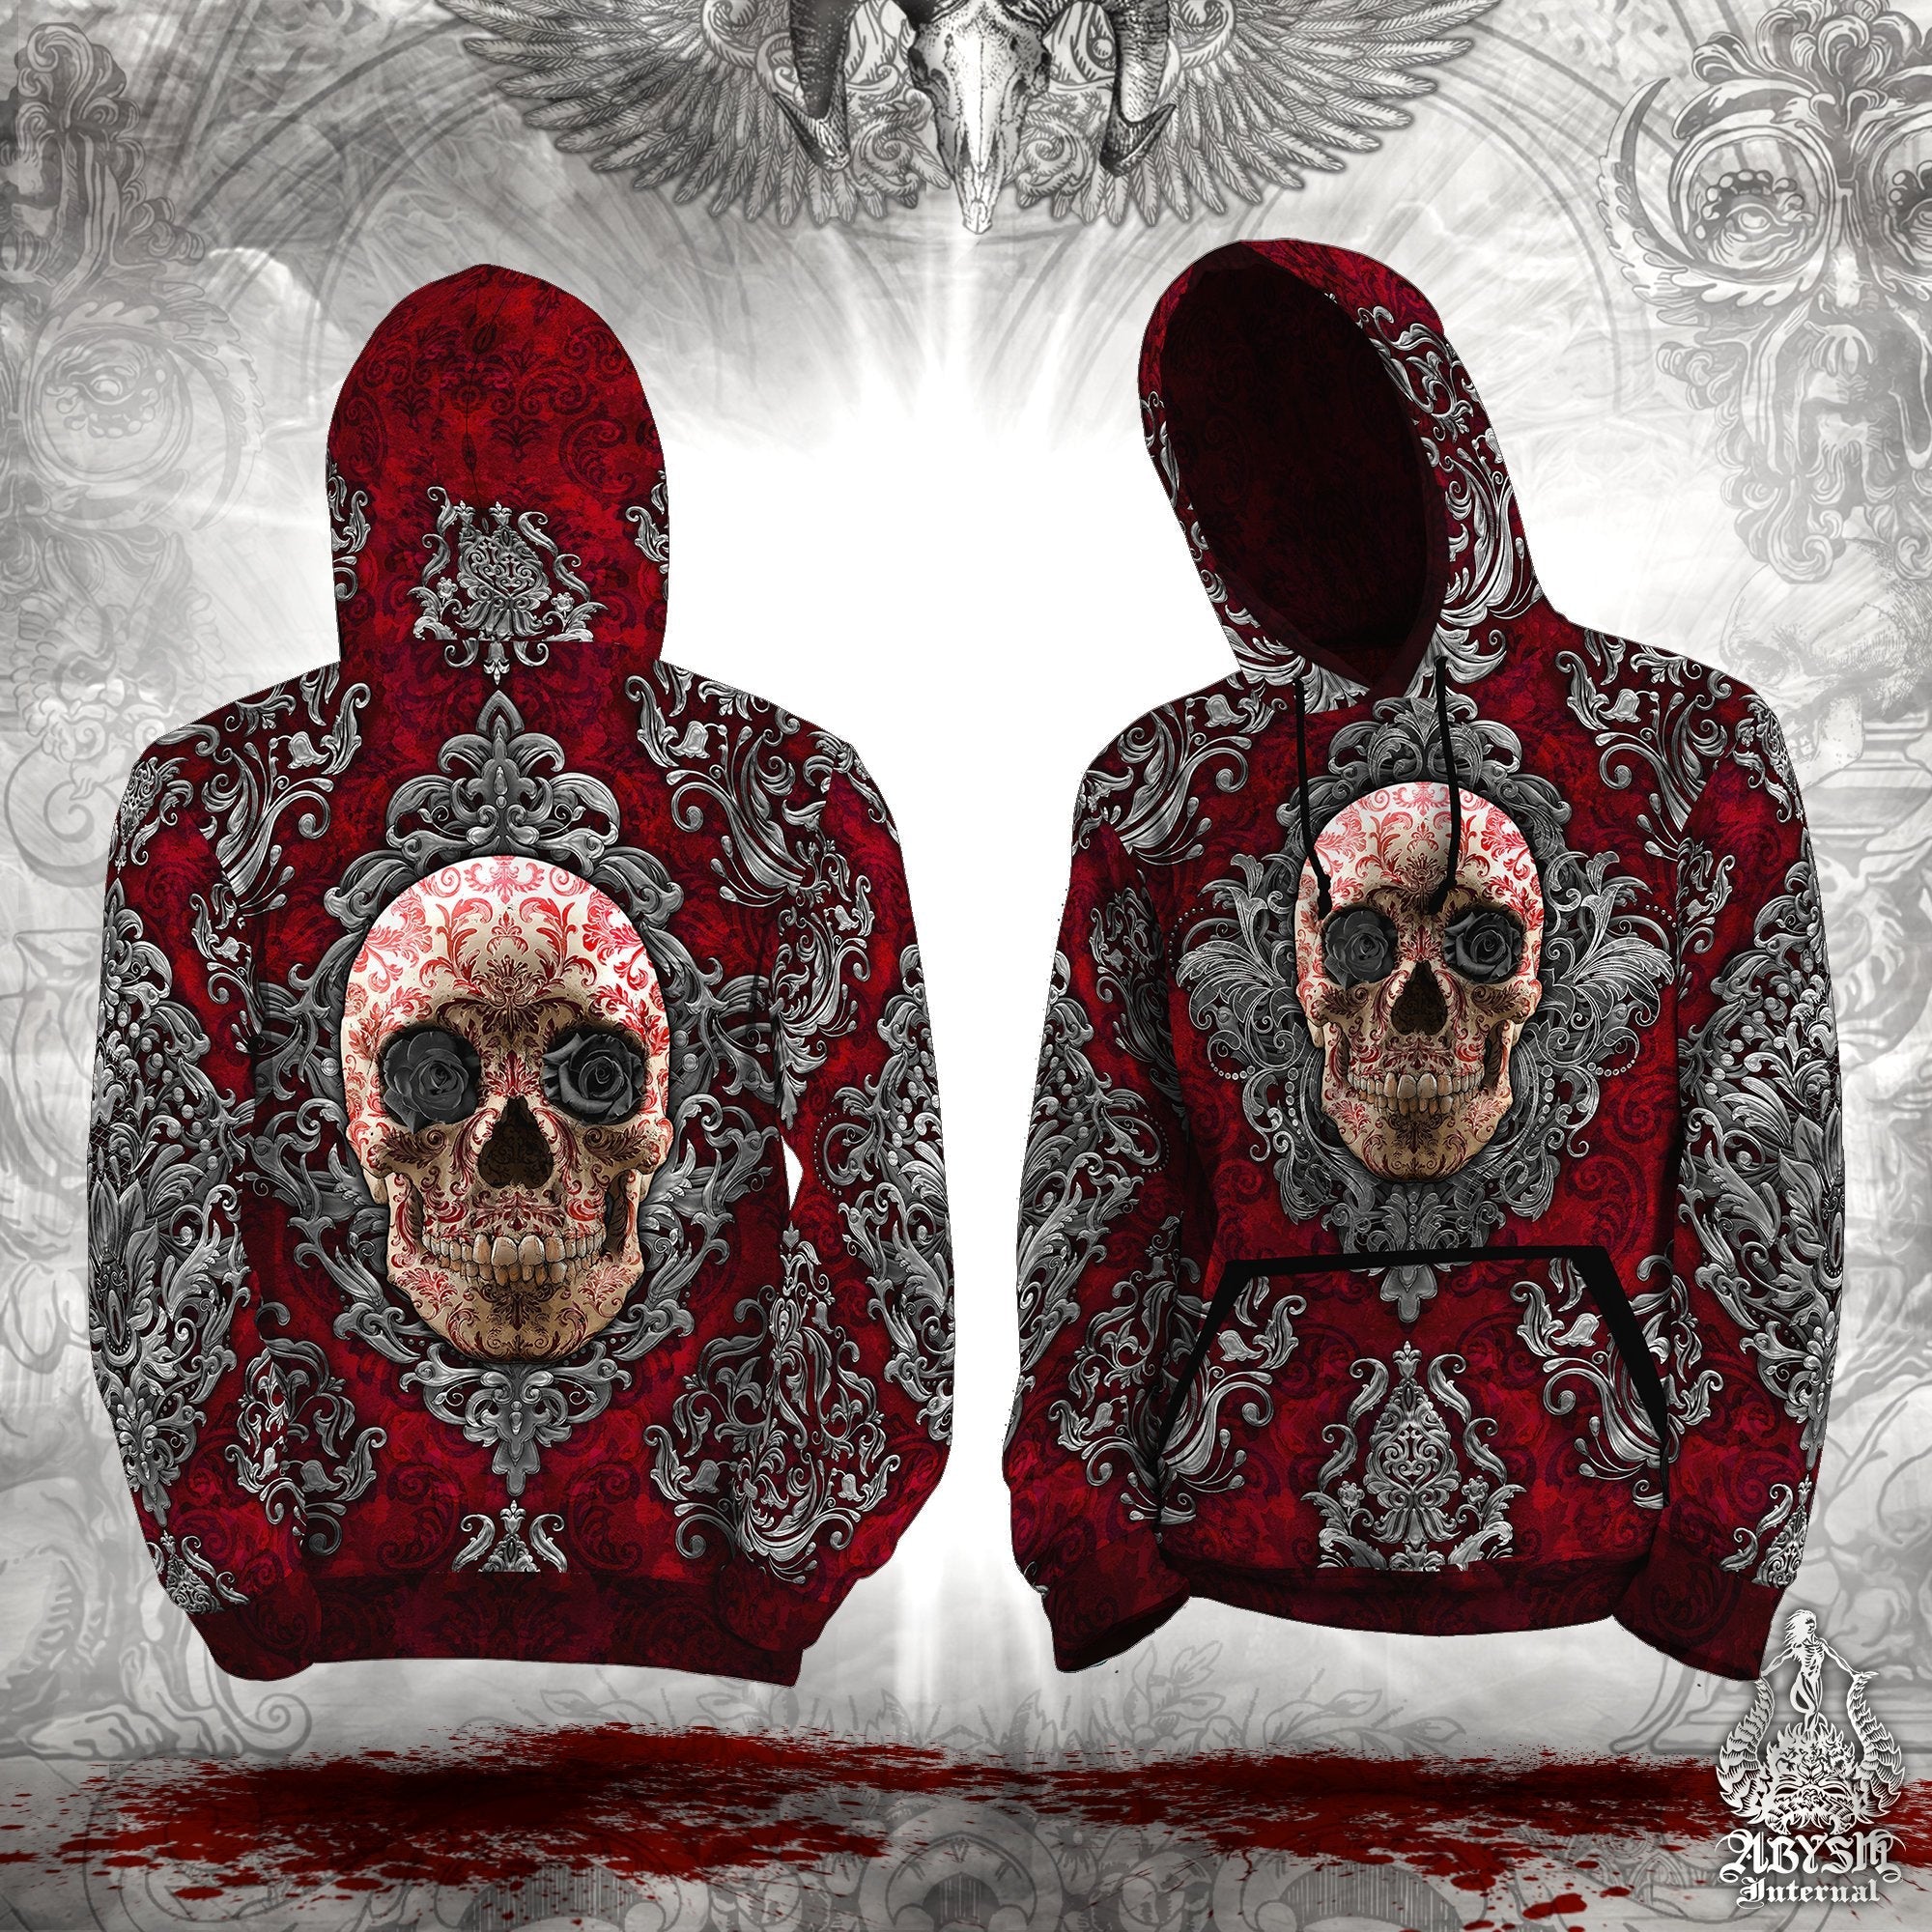 Skull Hoodie, Gothic Streetwear, Goth Outfit, Alternative Clothing, Unisex - Abysm Internal